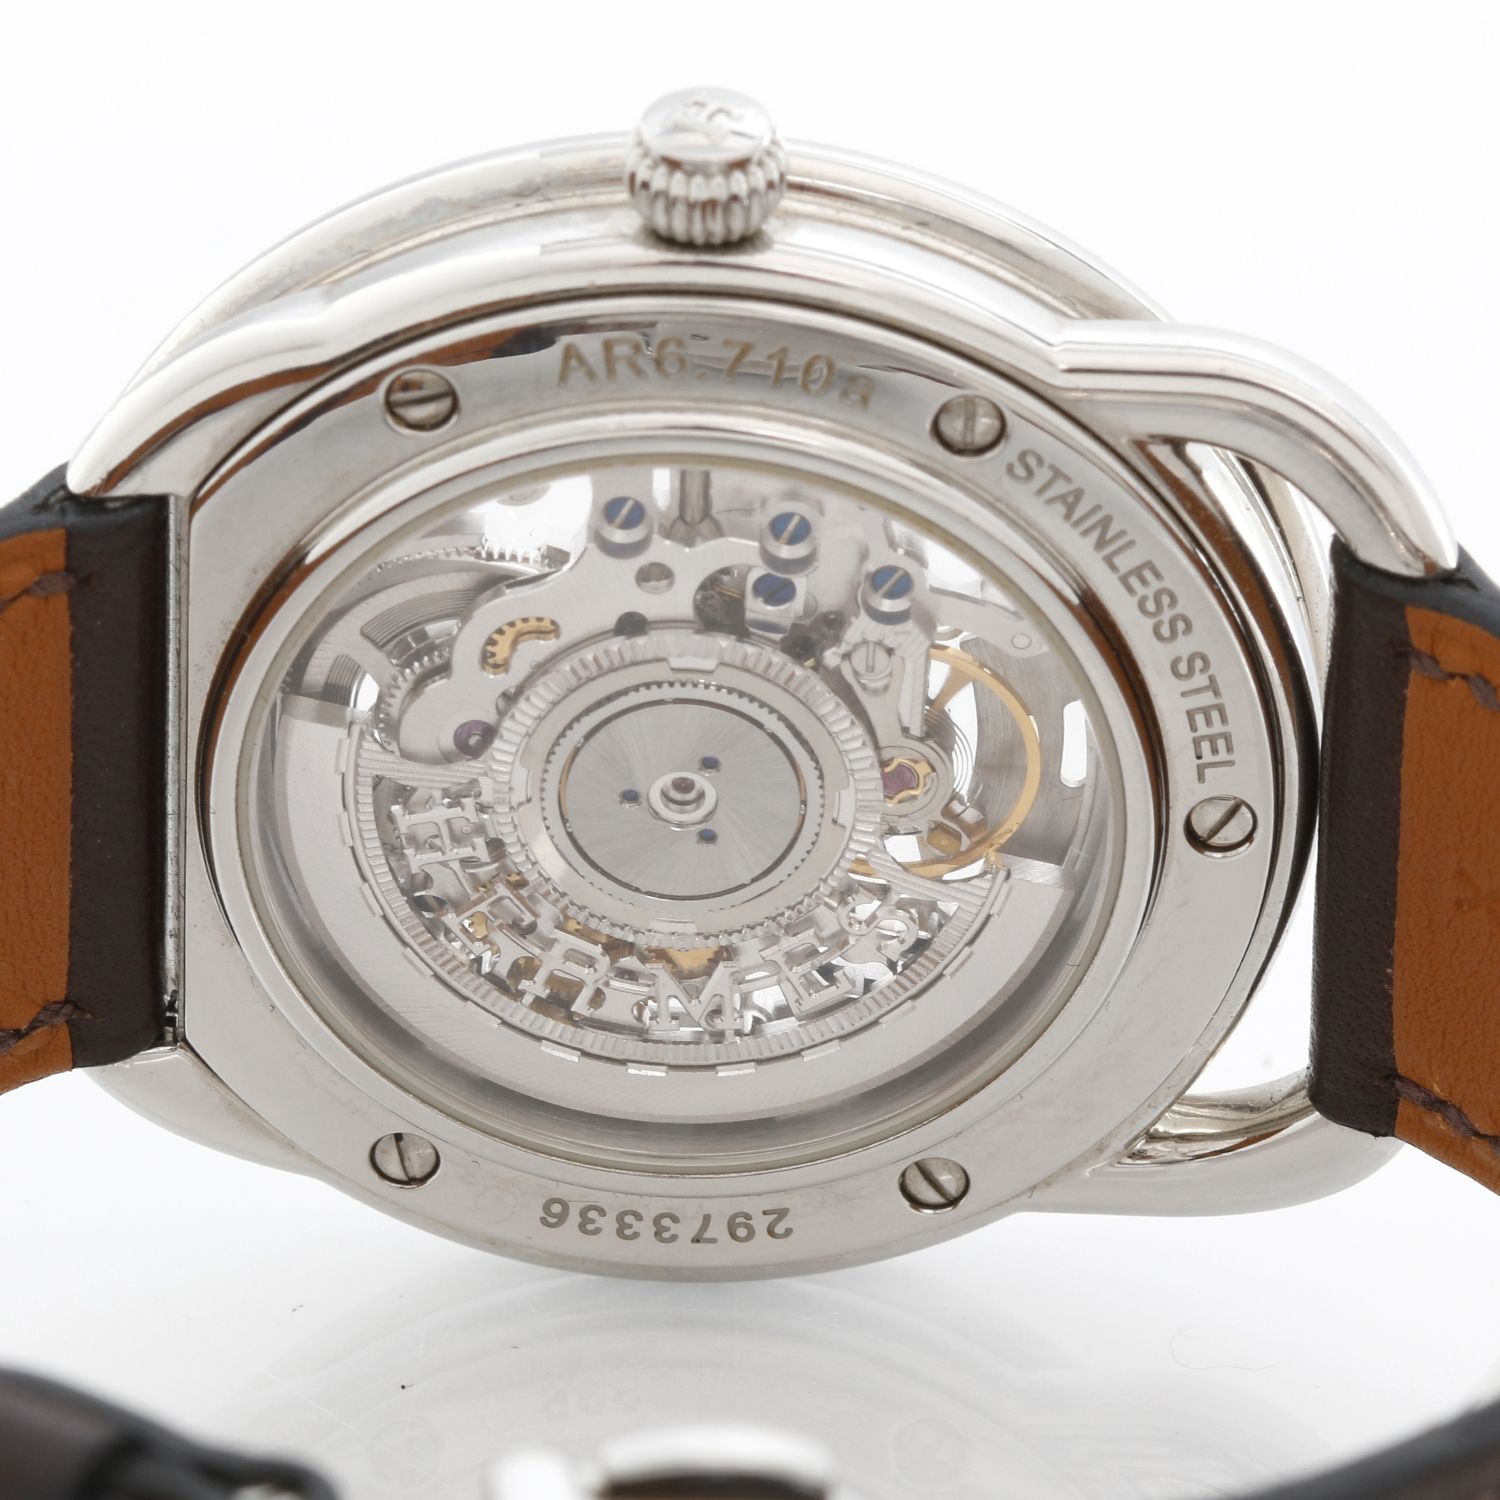 FS: Hermes Arceau 41mm FULL SET Close to New Swiss Automatic watch